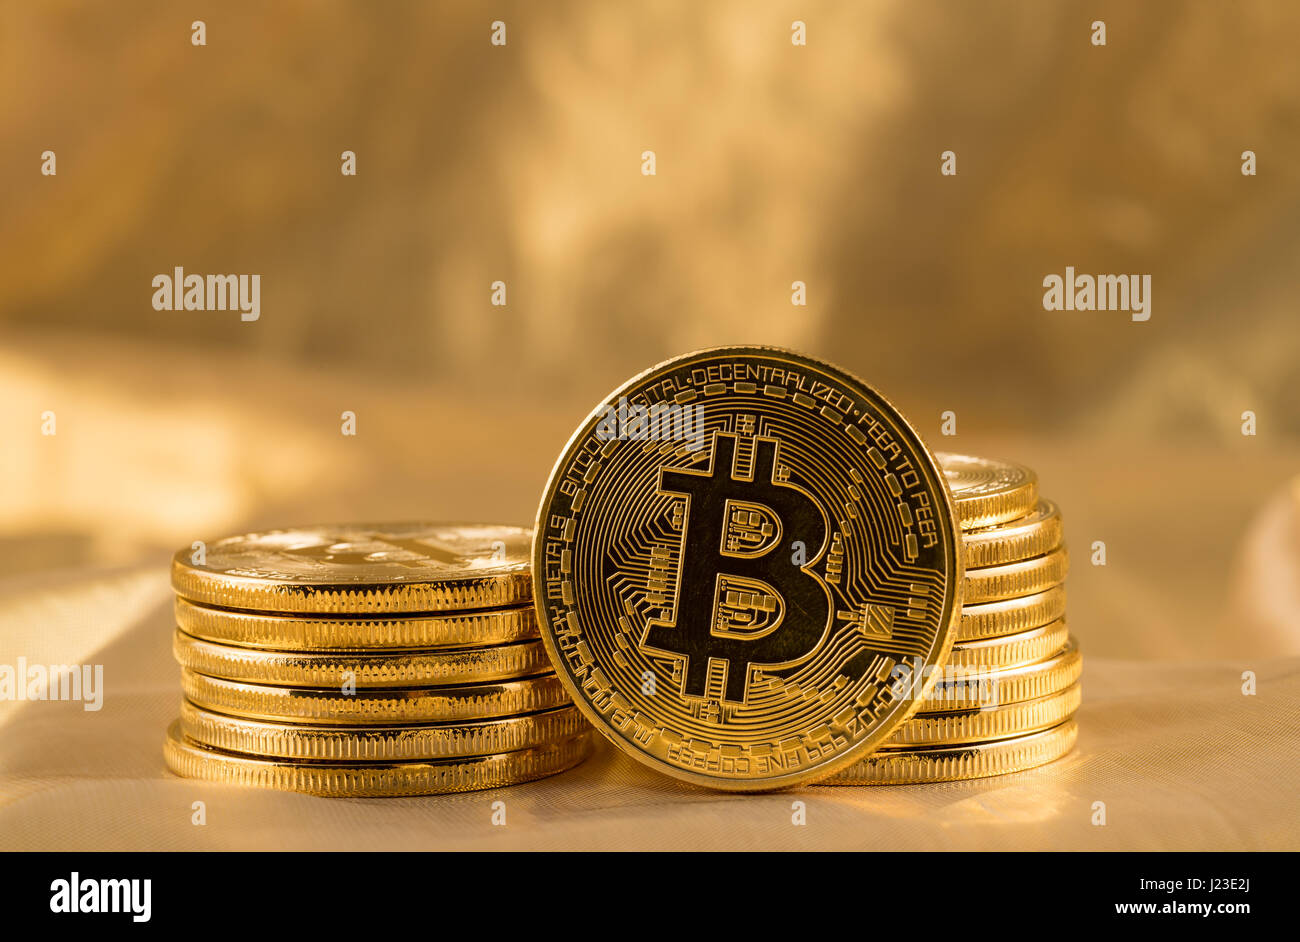 Pila de monedas o de bits sobre fondo dorado bitcoin para ilustrar blockchain y cyber moneda Foto de stock